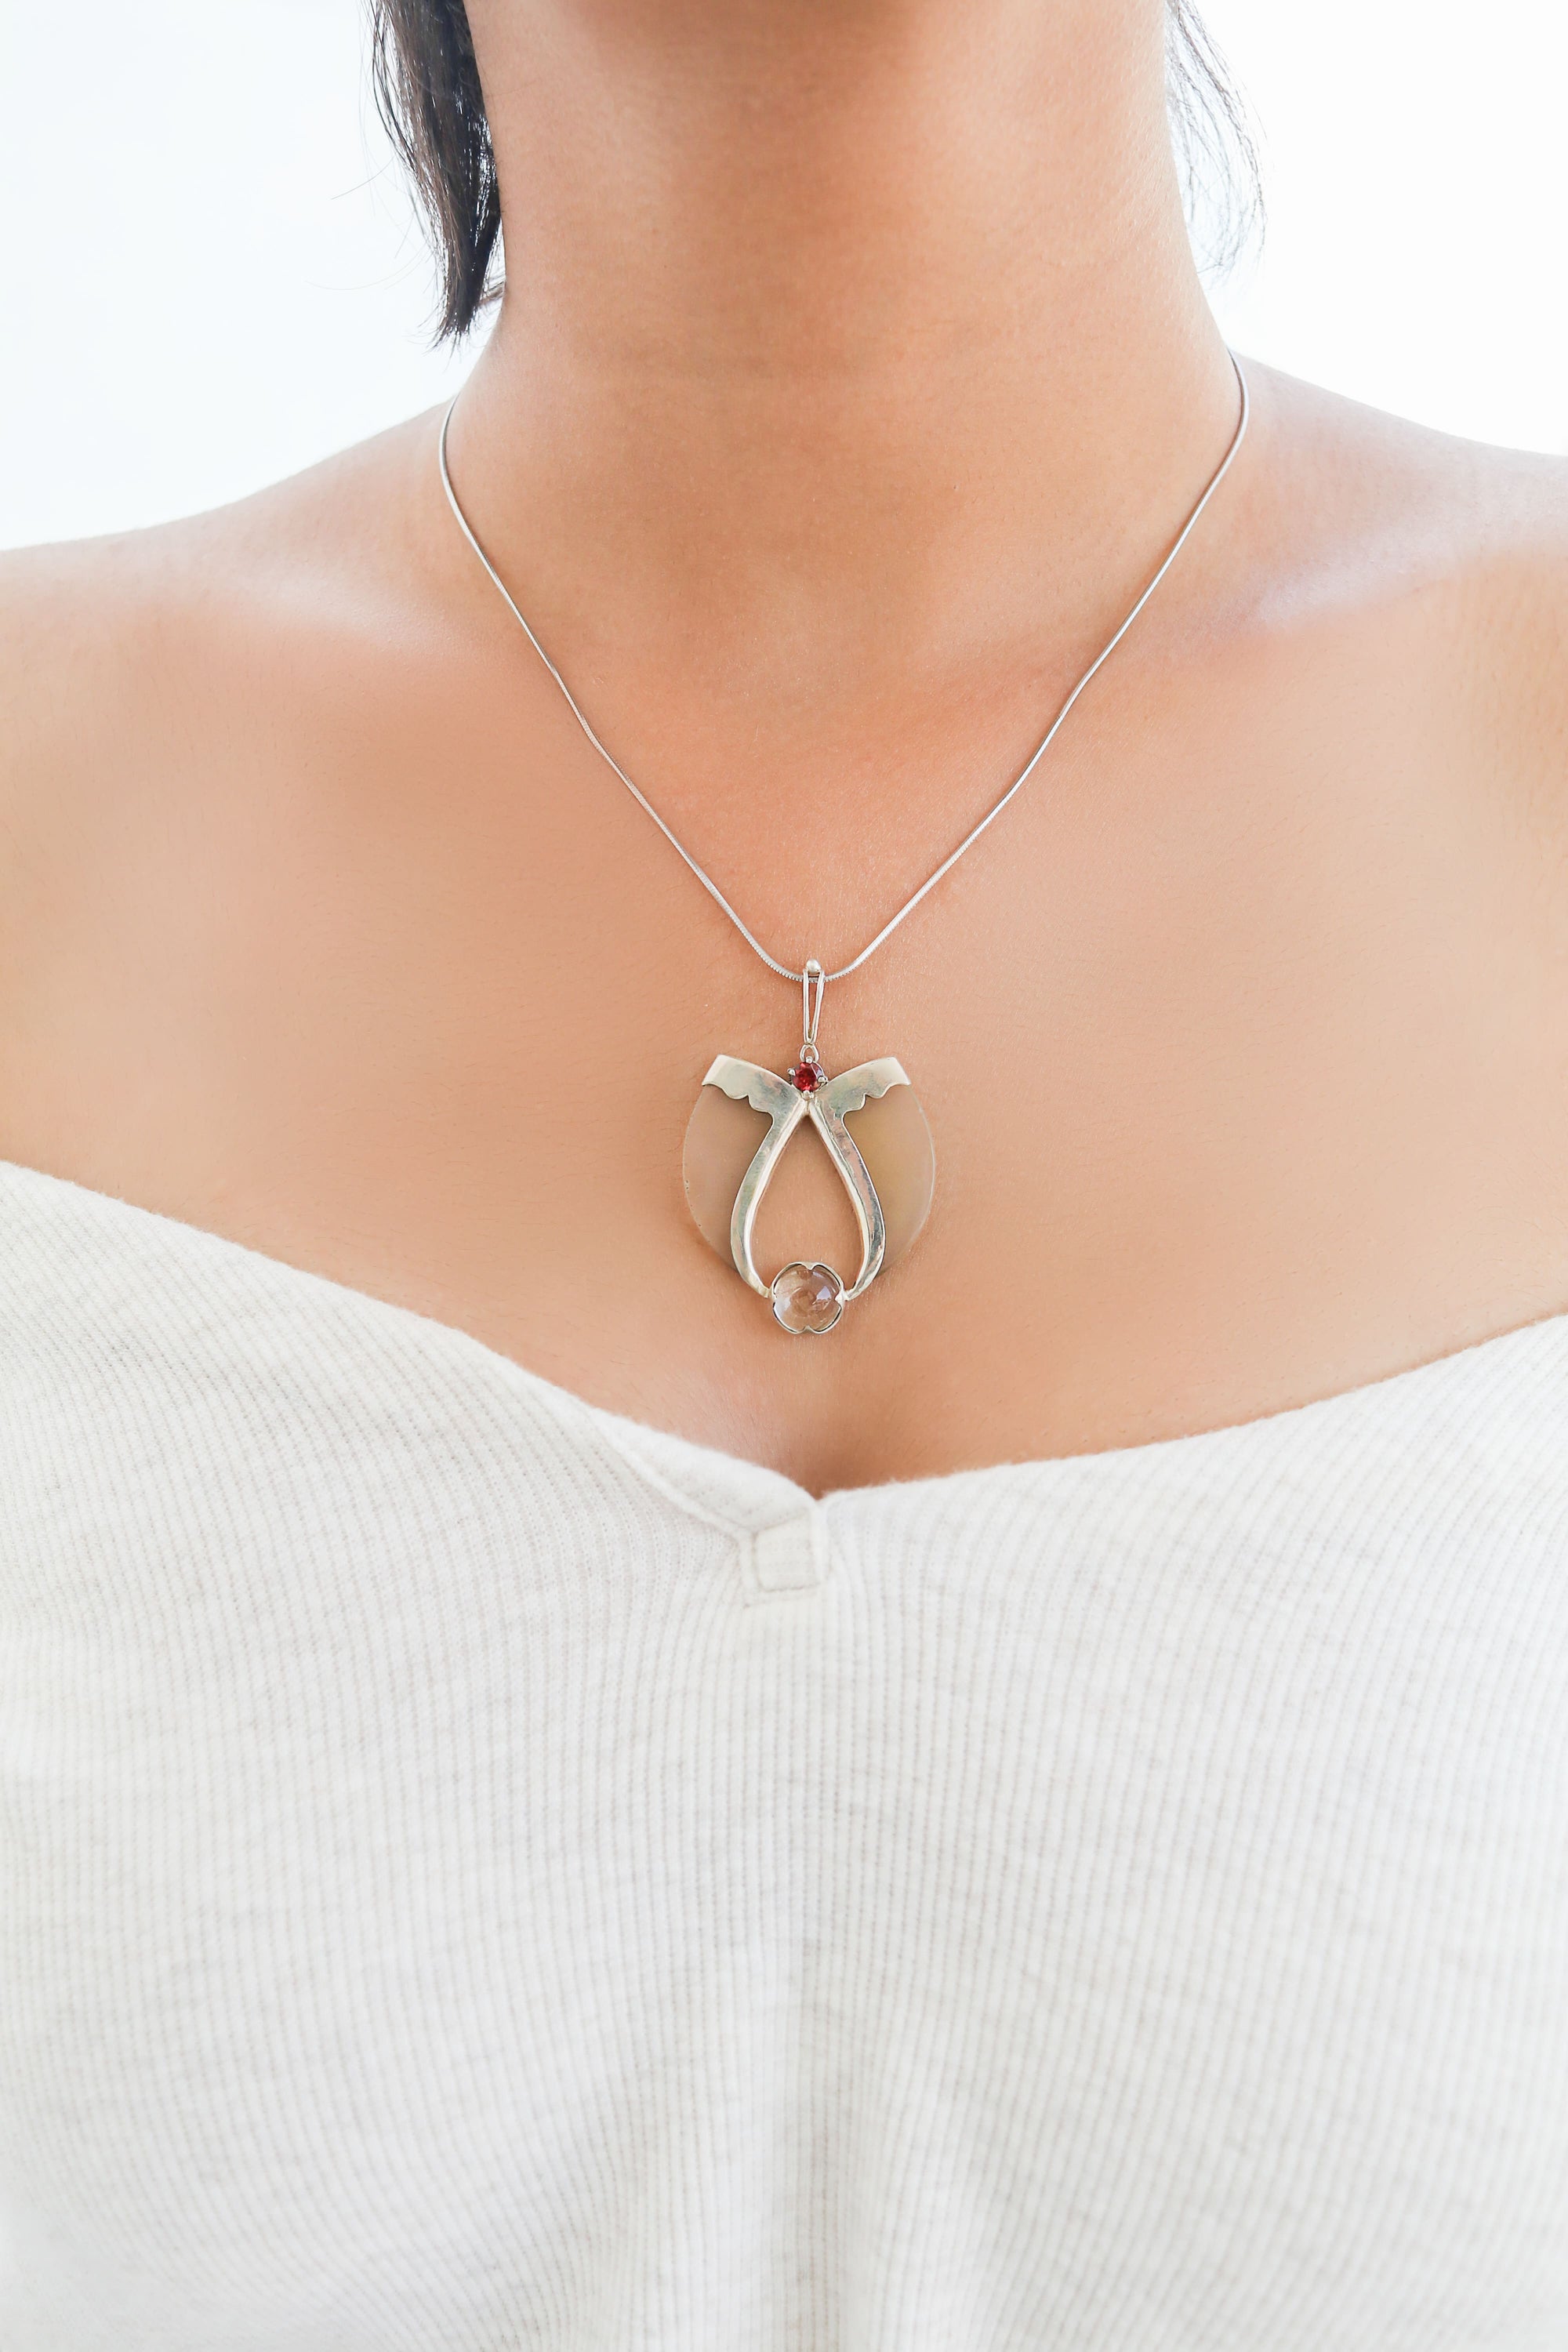 Silver Pine Tree Ring Holder Necklace | Handmado – Handmado.com